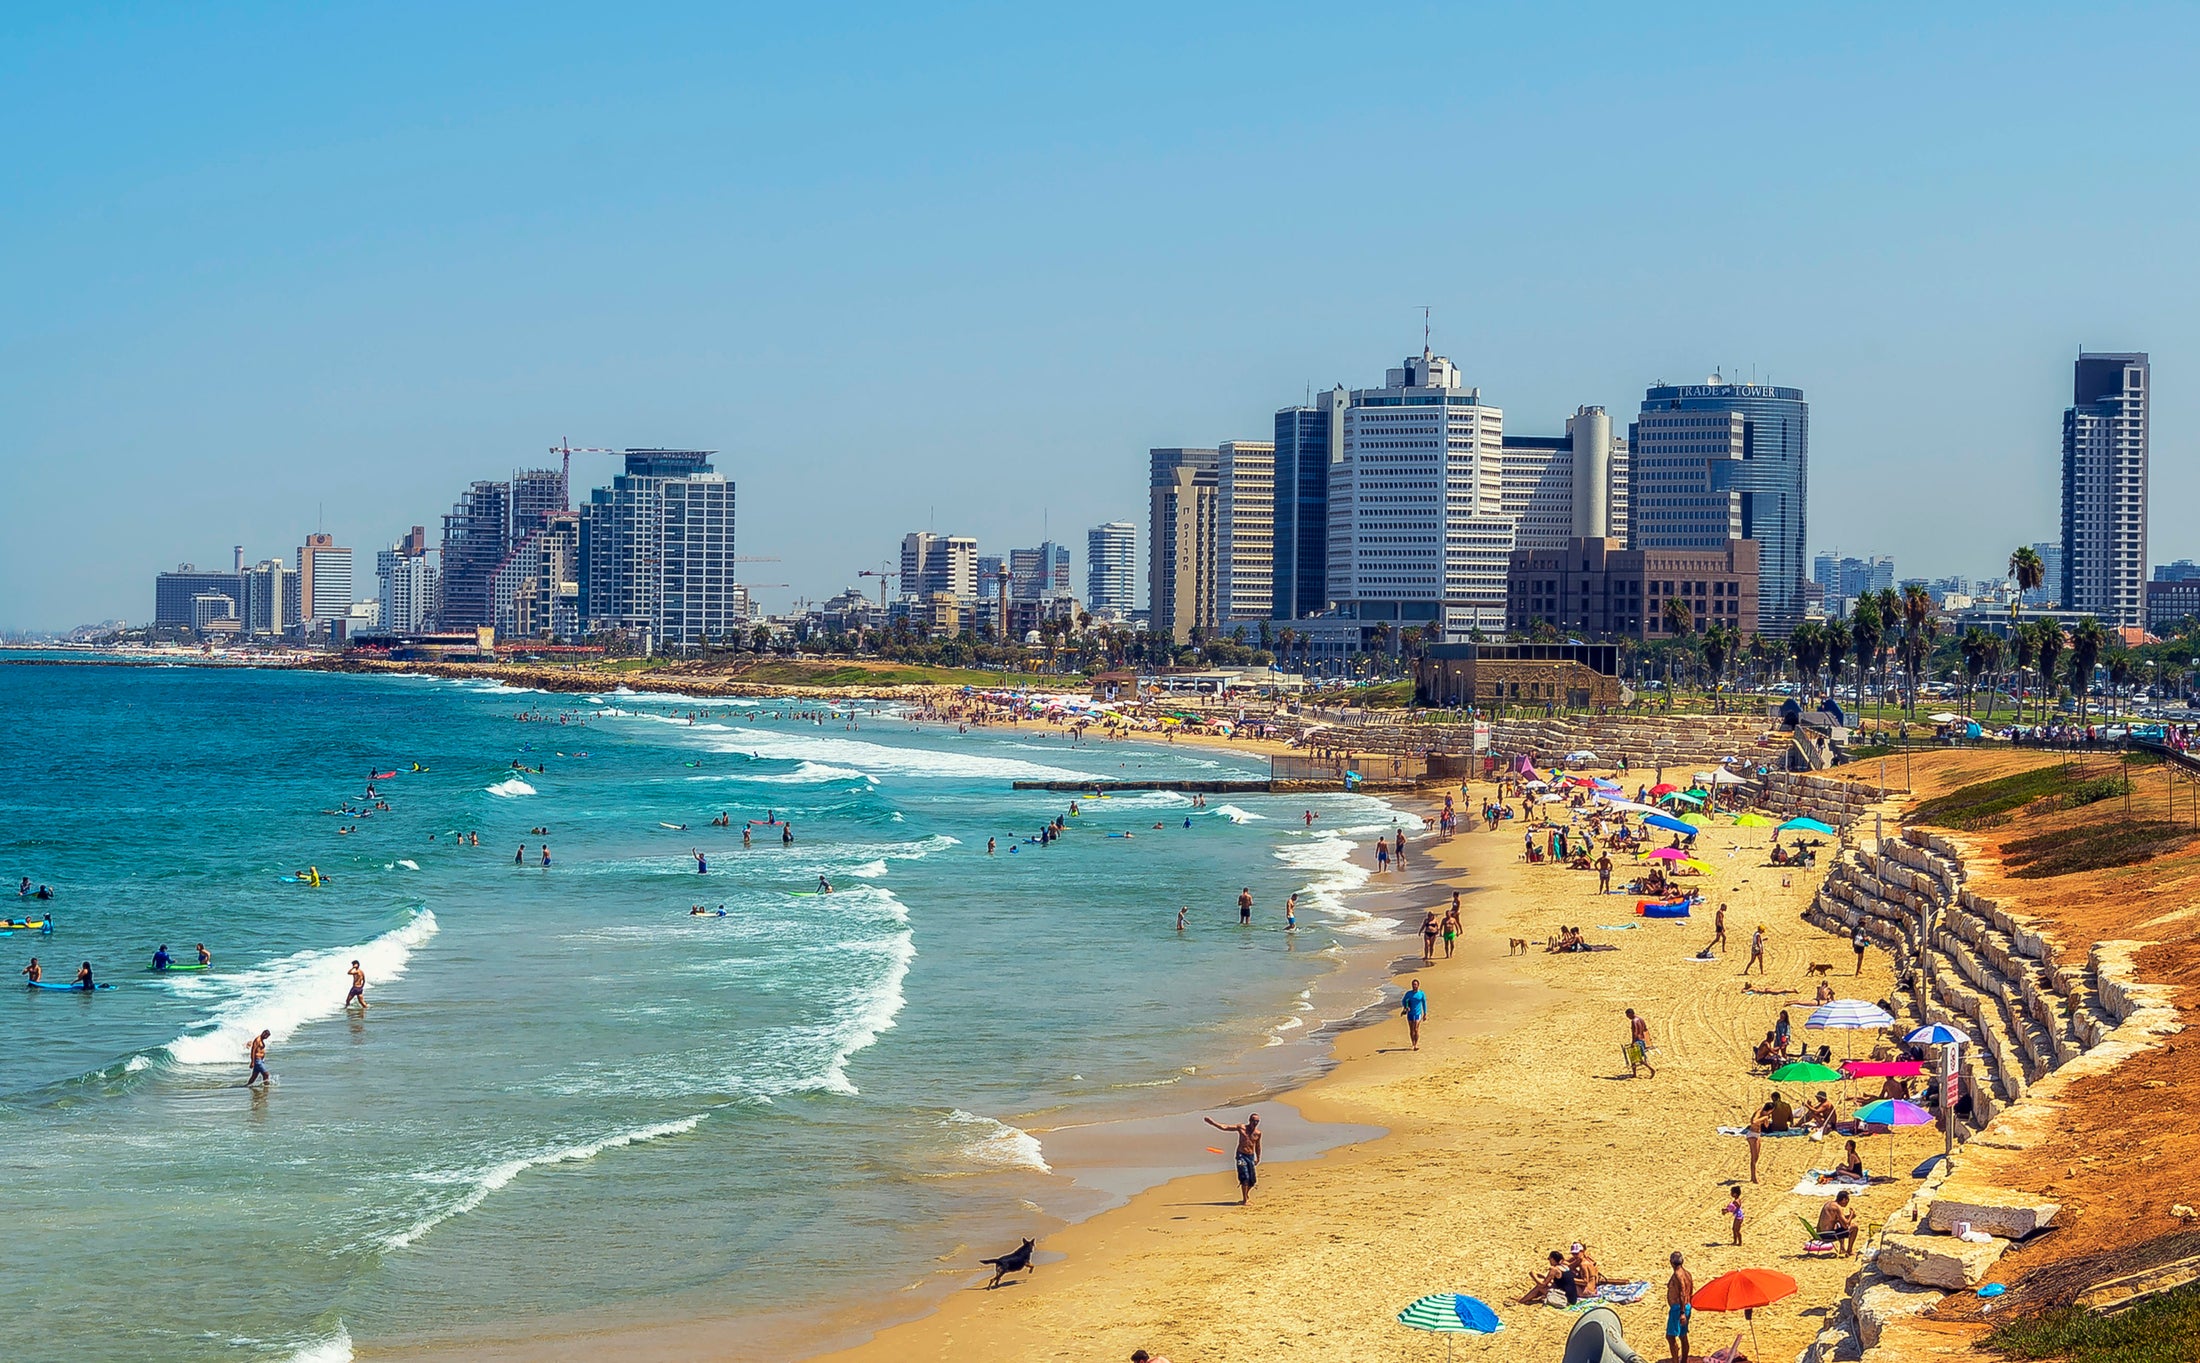 Israel reopens to international travelers